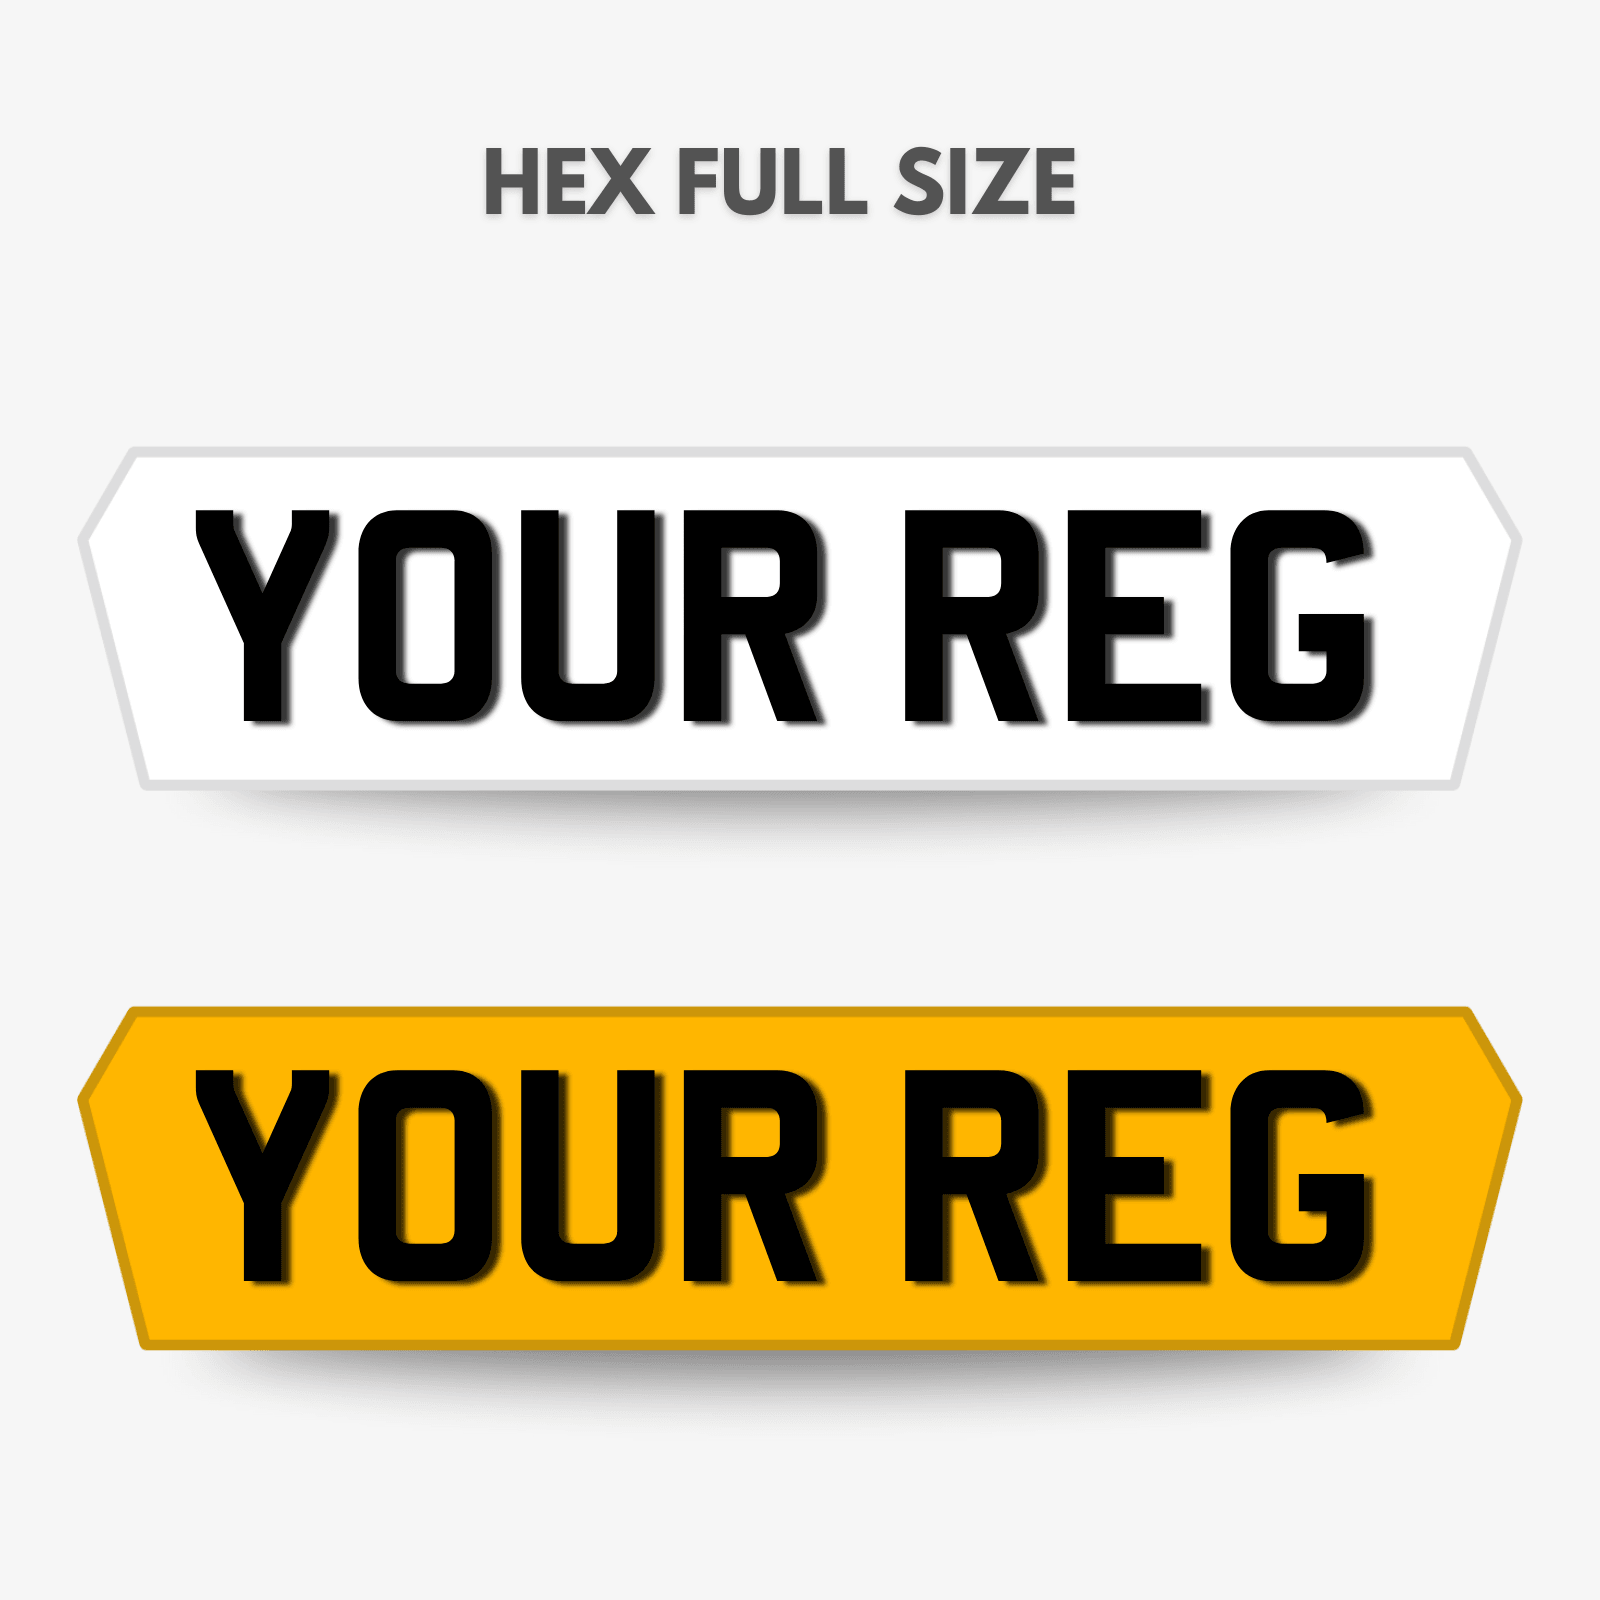 hex 3d gel resin domed road legal number plate, Number plate maker, number plate supplier